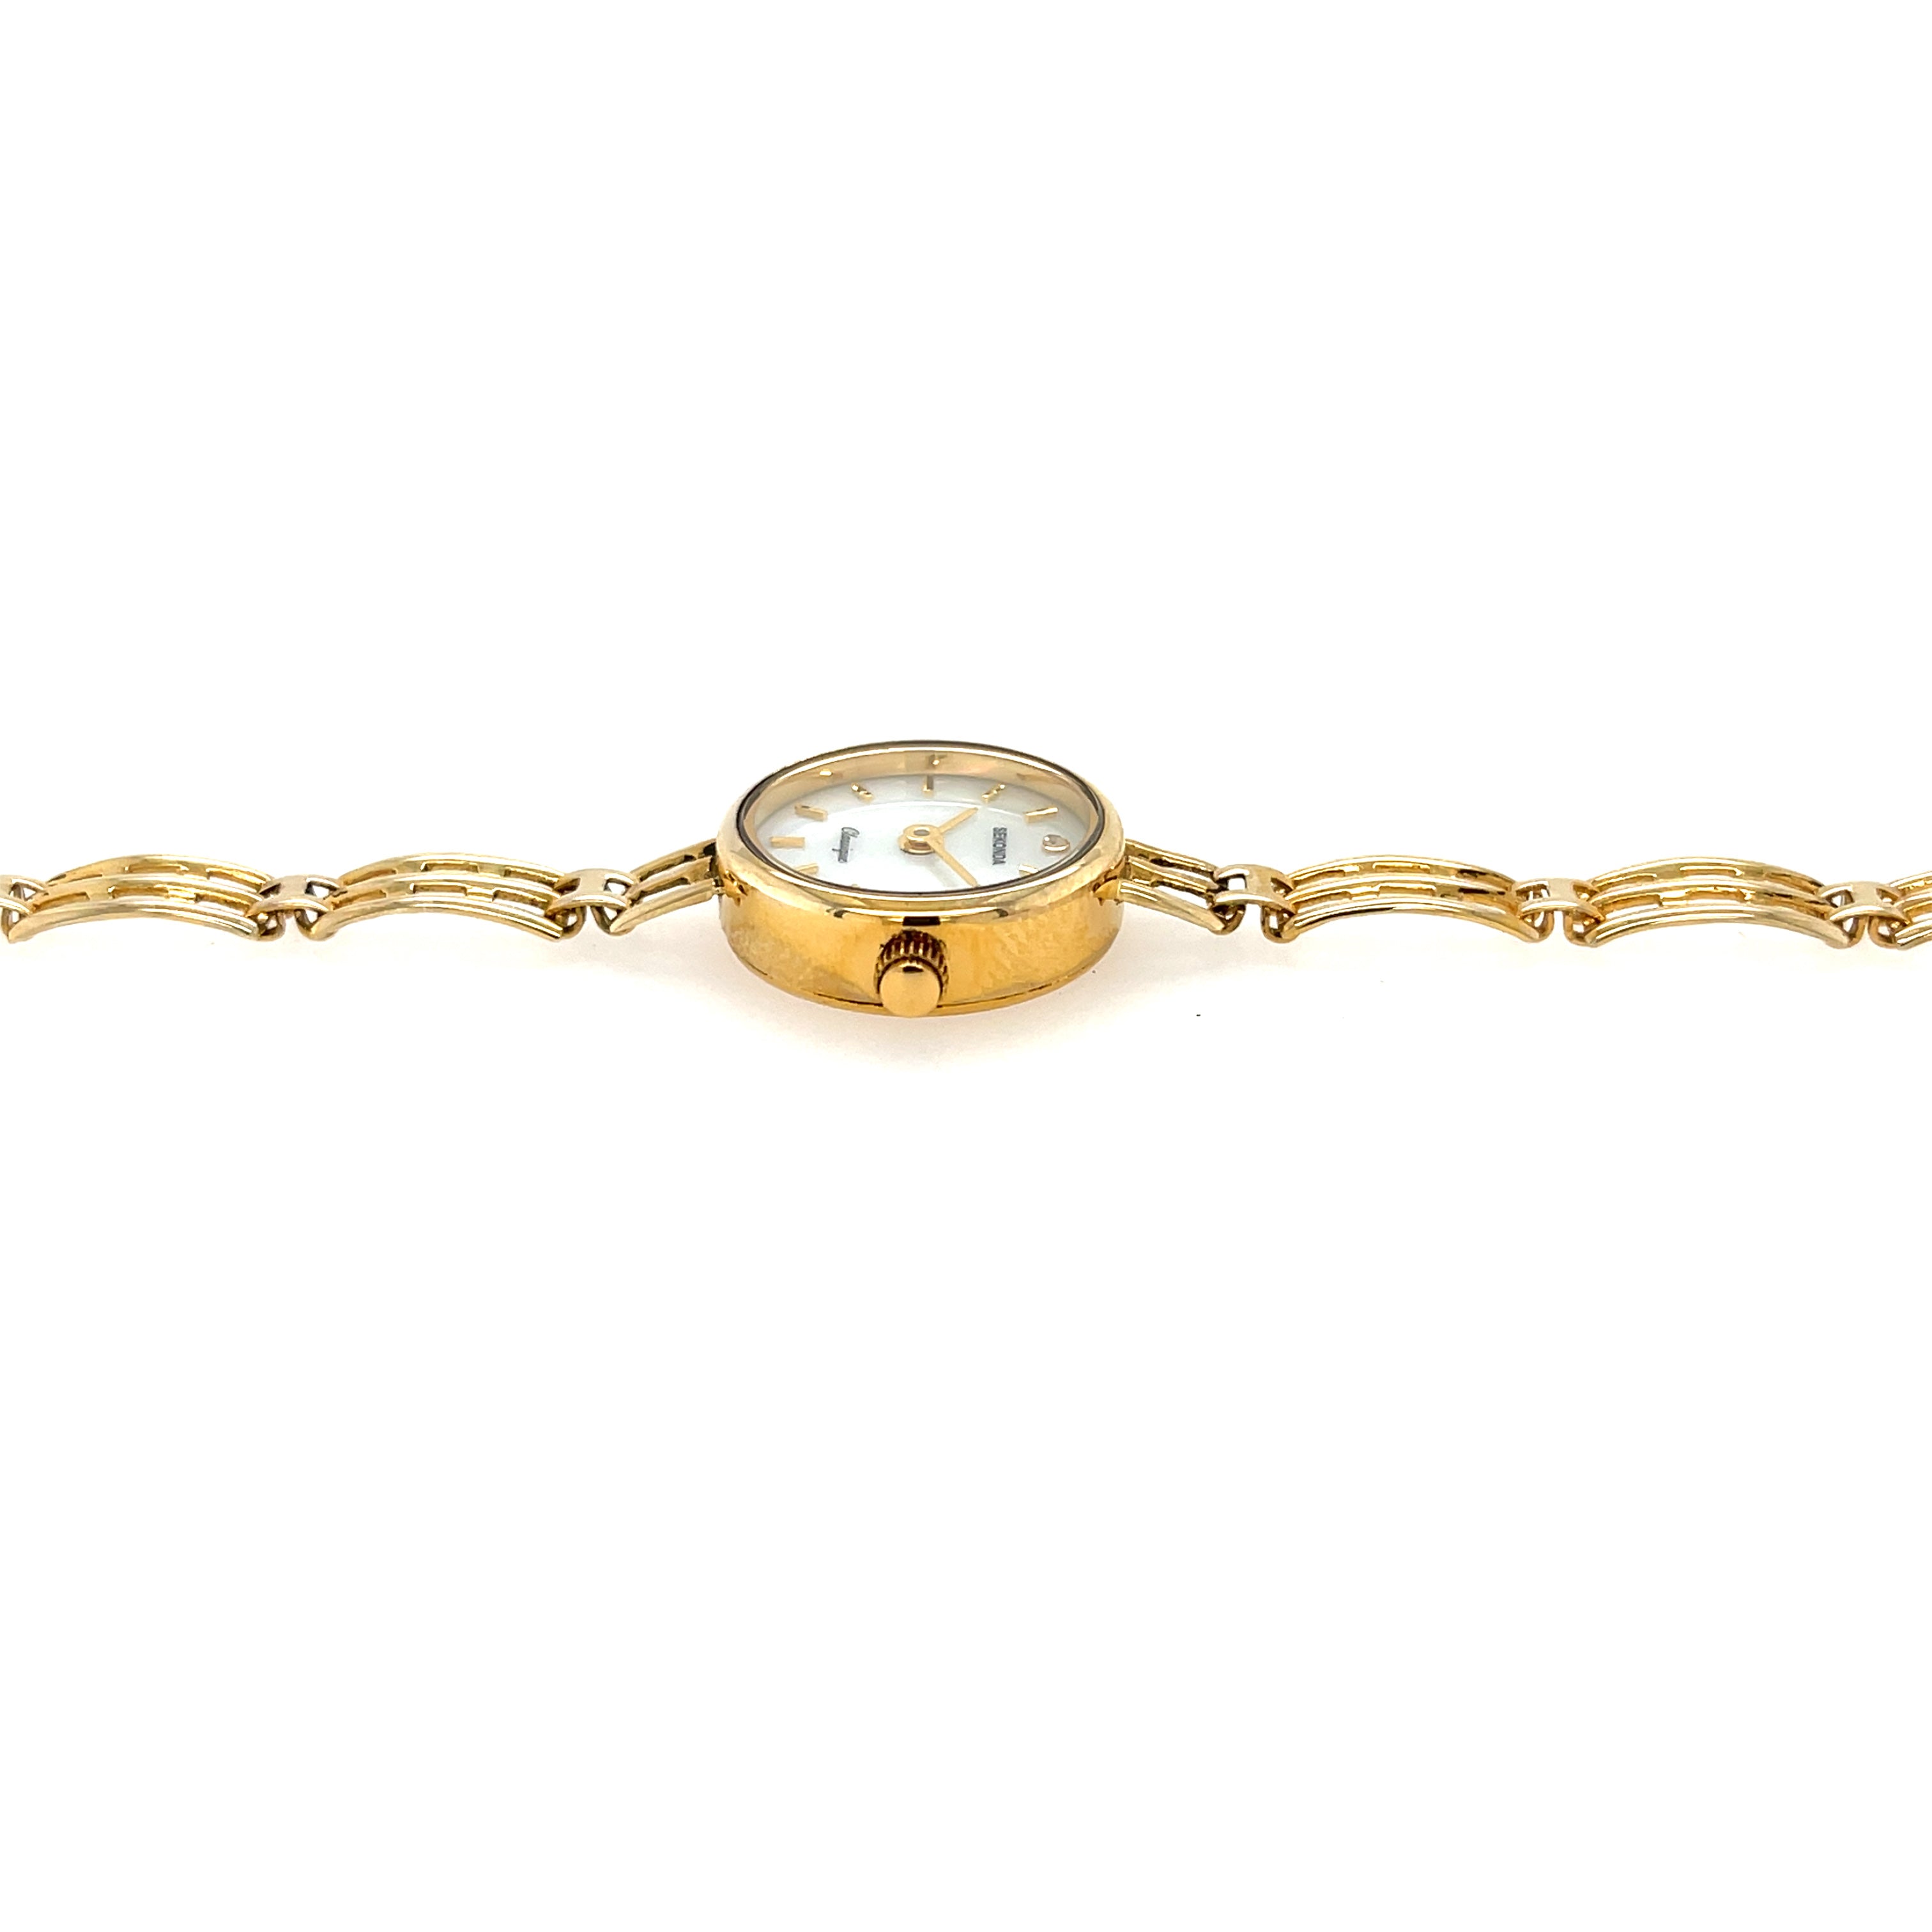 SEKONDA Classique 9ct Yellow Gold Ladies Bracelet Watch